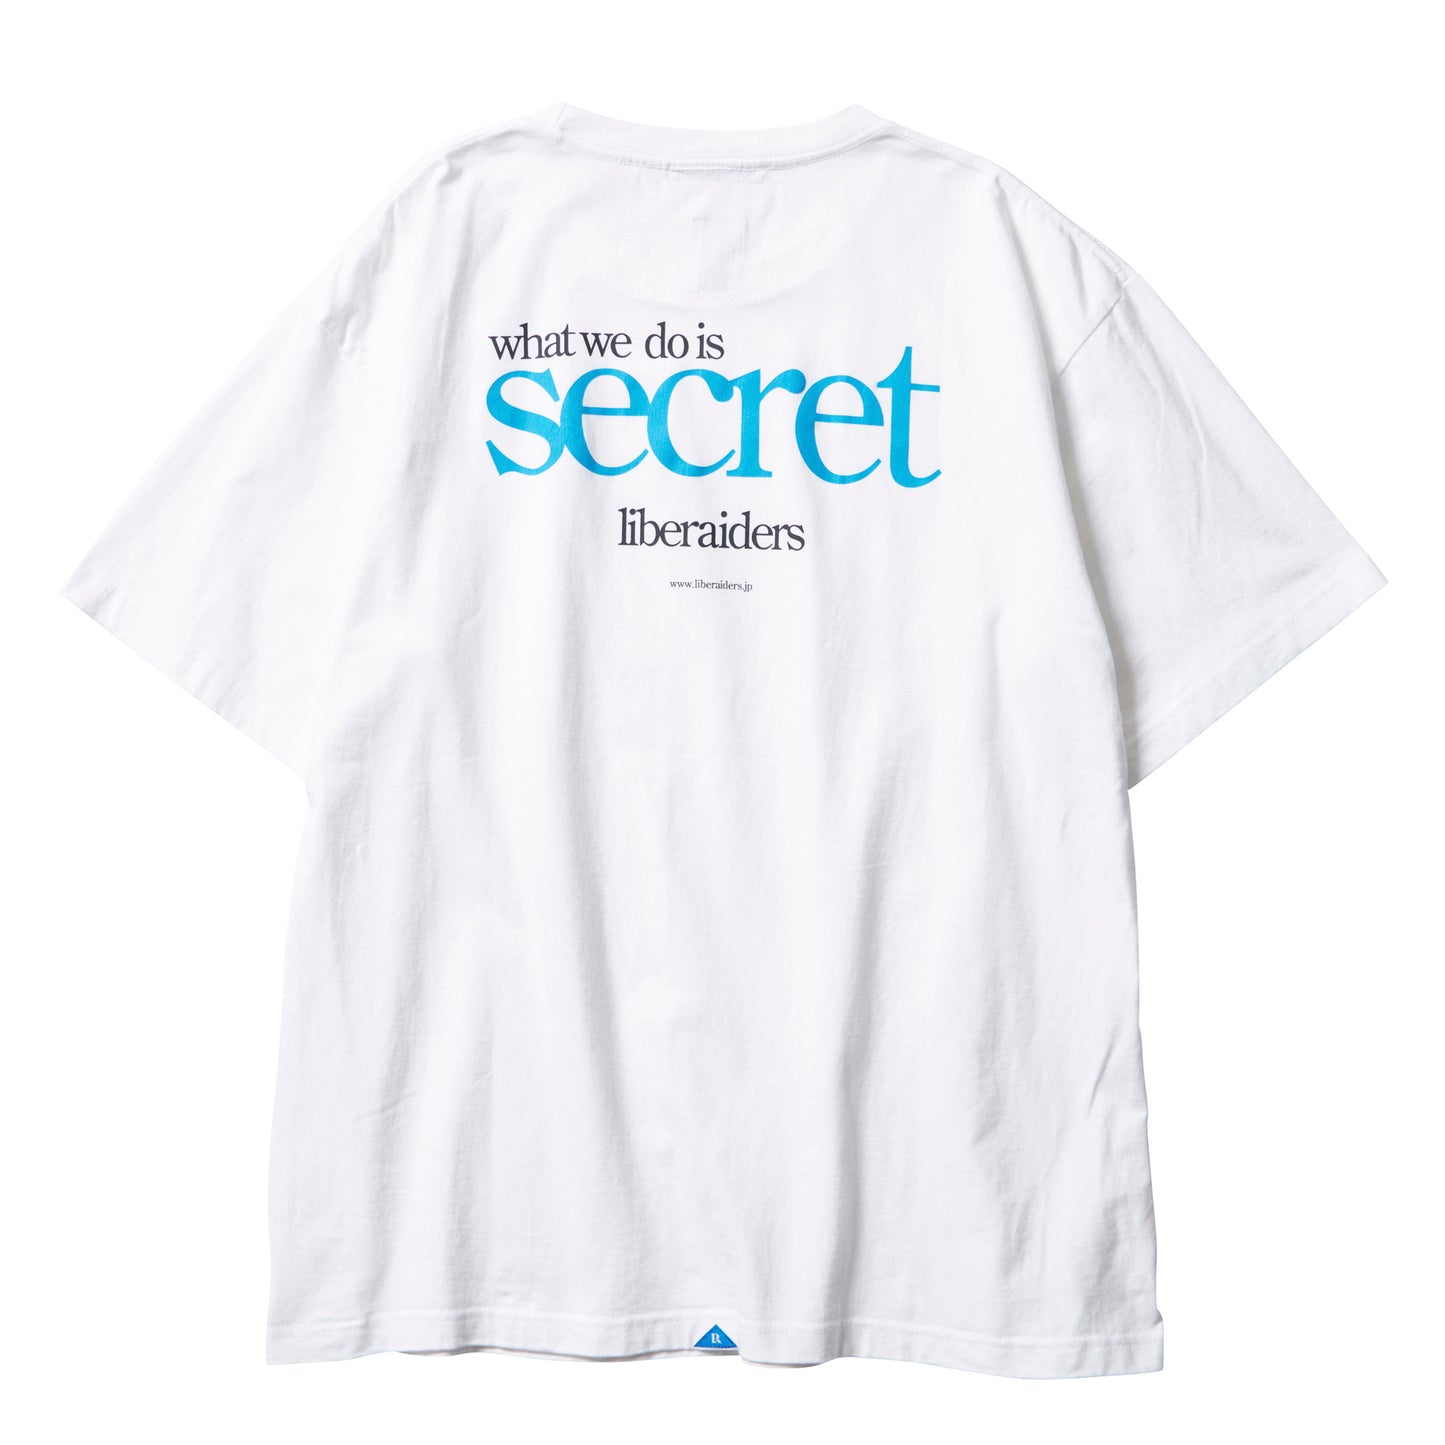 Liberaiders リベレイダース SECRET TEE シークレット Tシャツ 70615 ホワイト